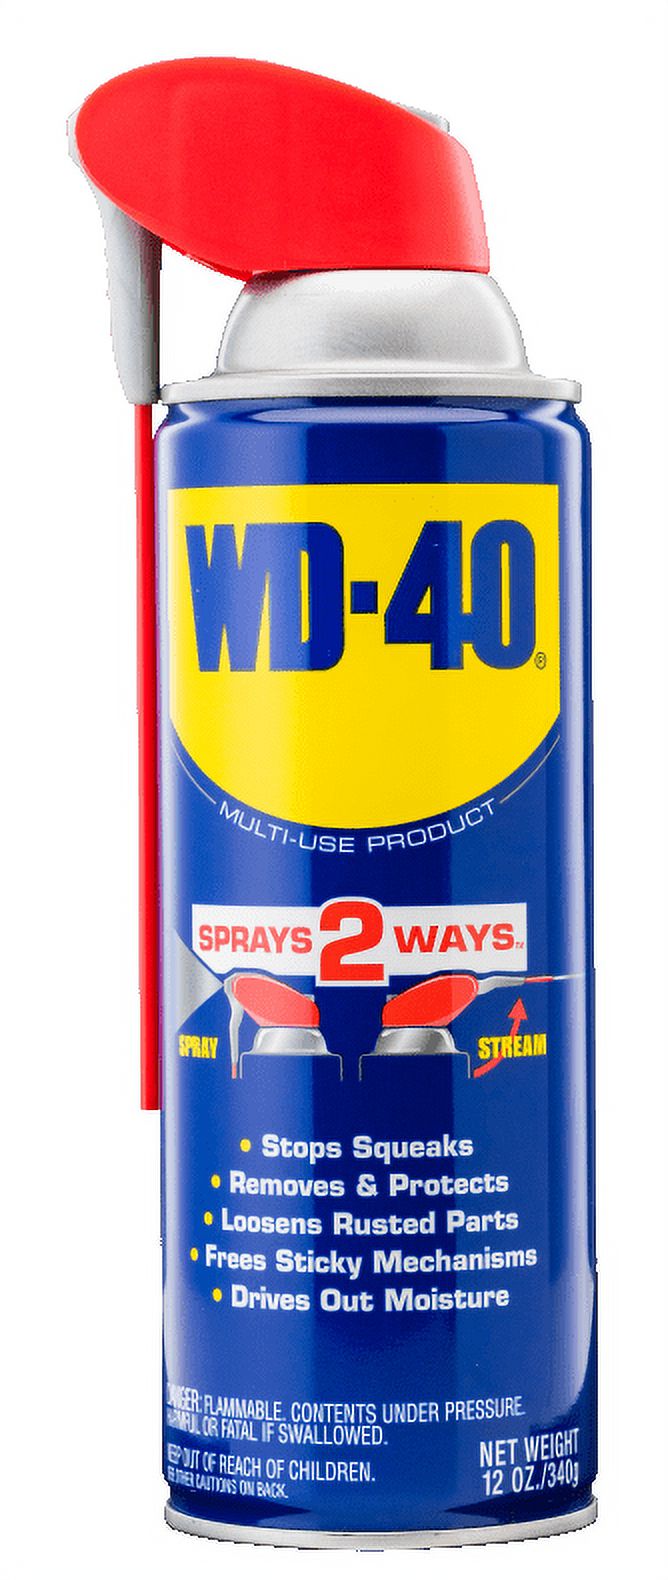 Original WD-40 Formula, Multi-Use Product With Smart Straw Sprays 2 Ways, Multi-Purpose Lubricant Spray, 12 oz - image 1 of 10